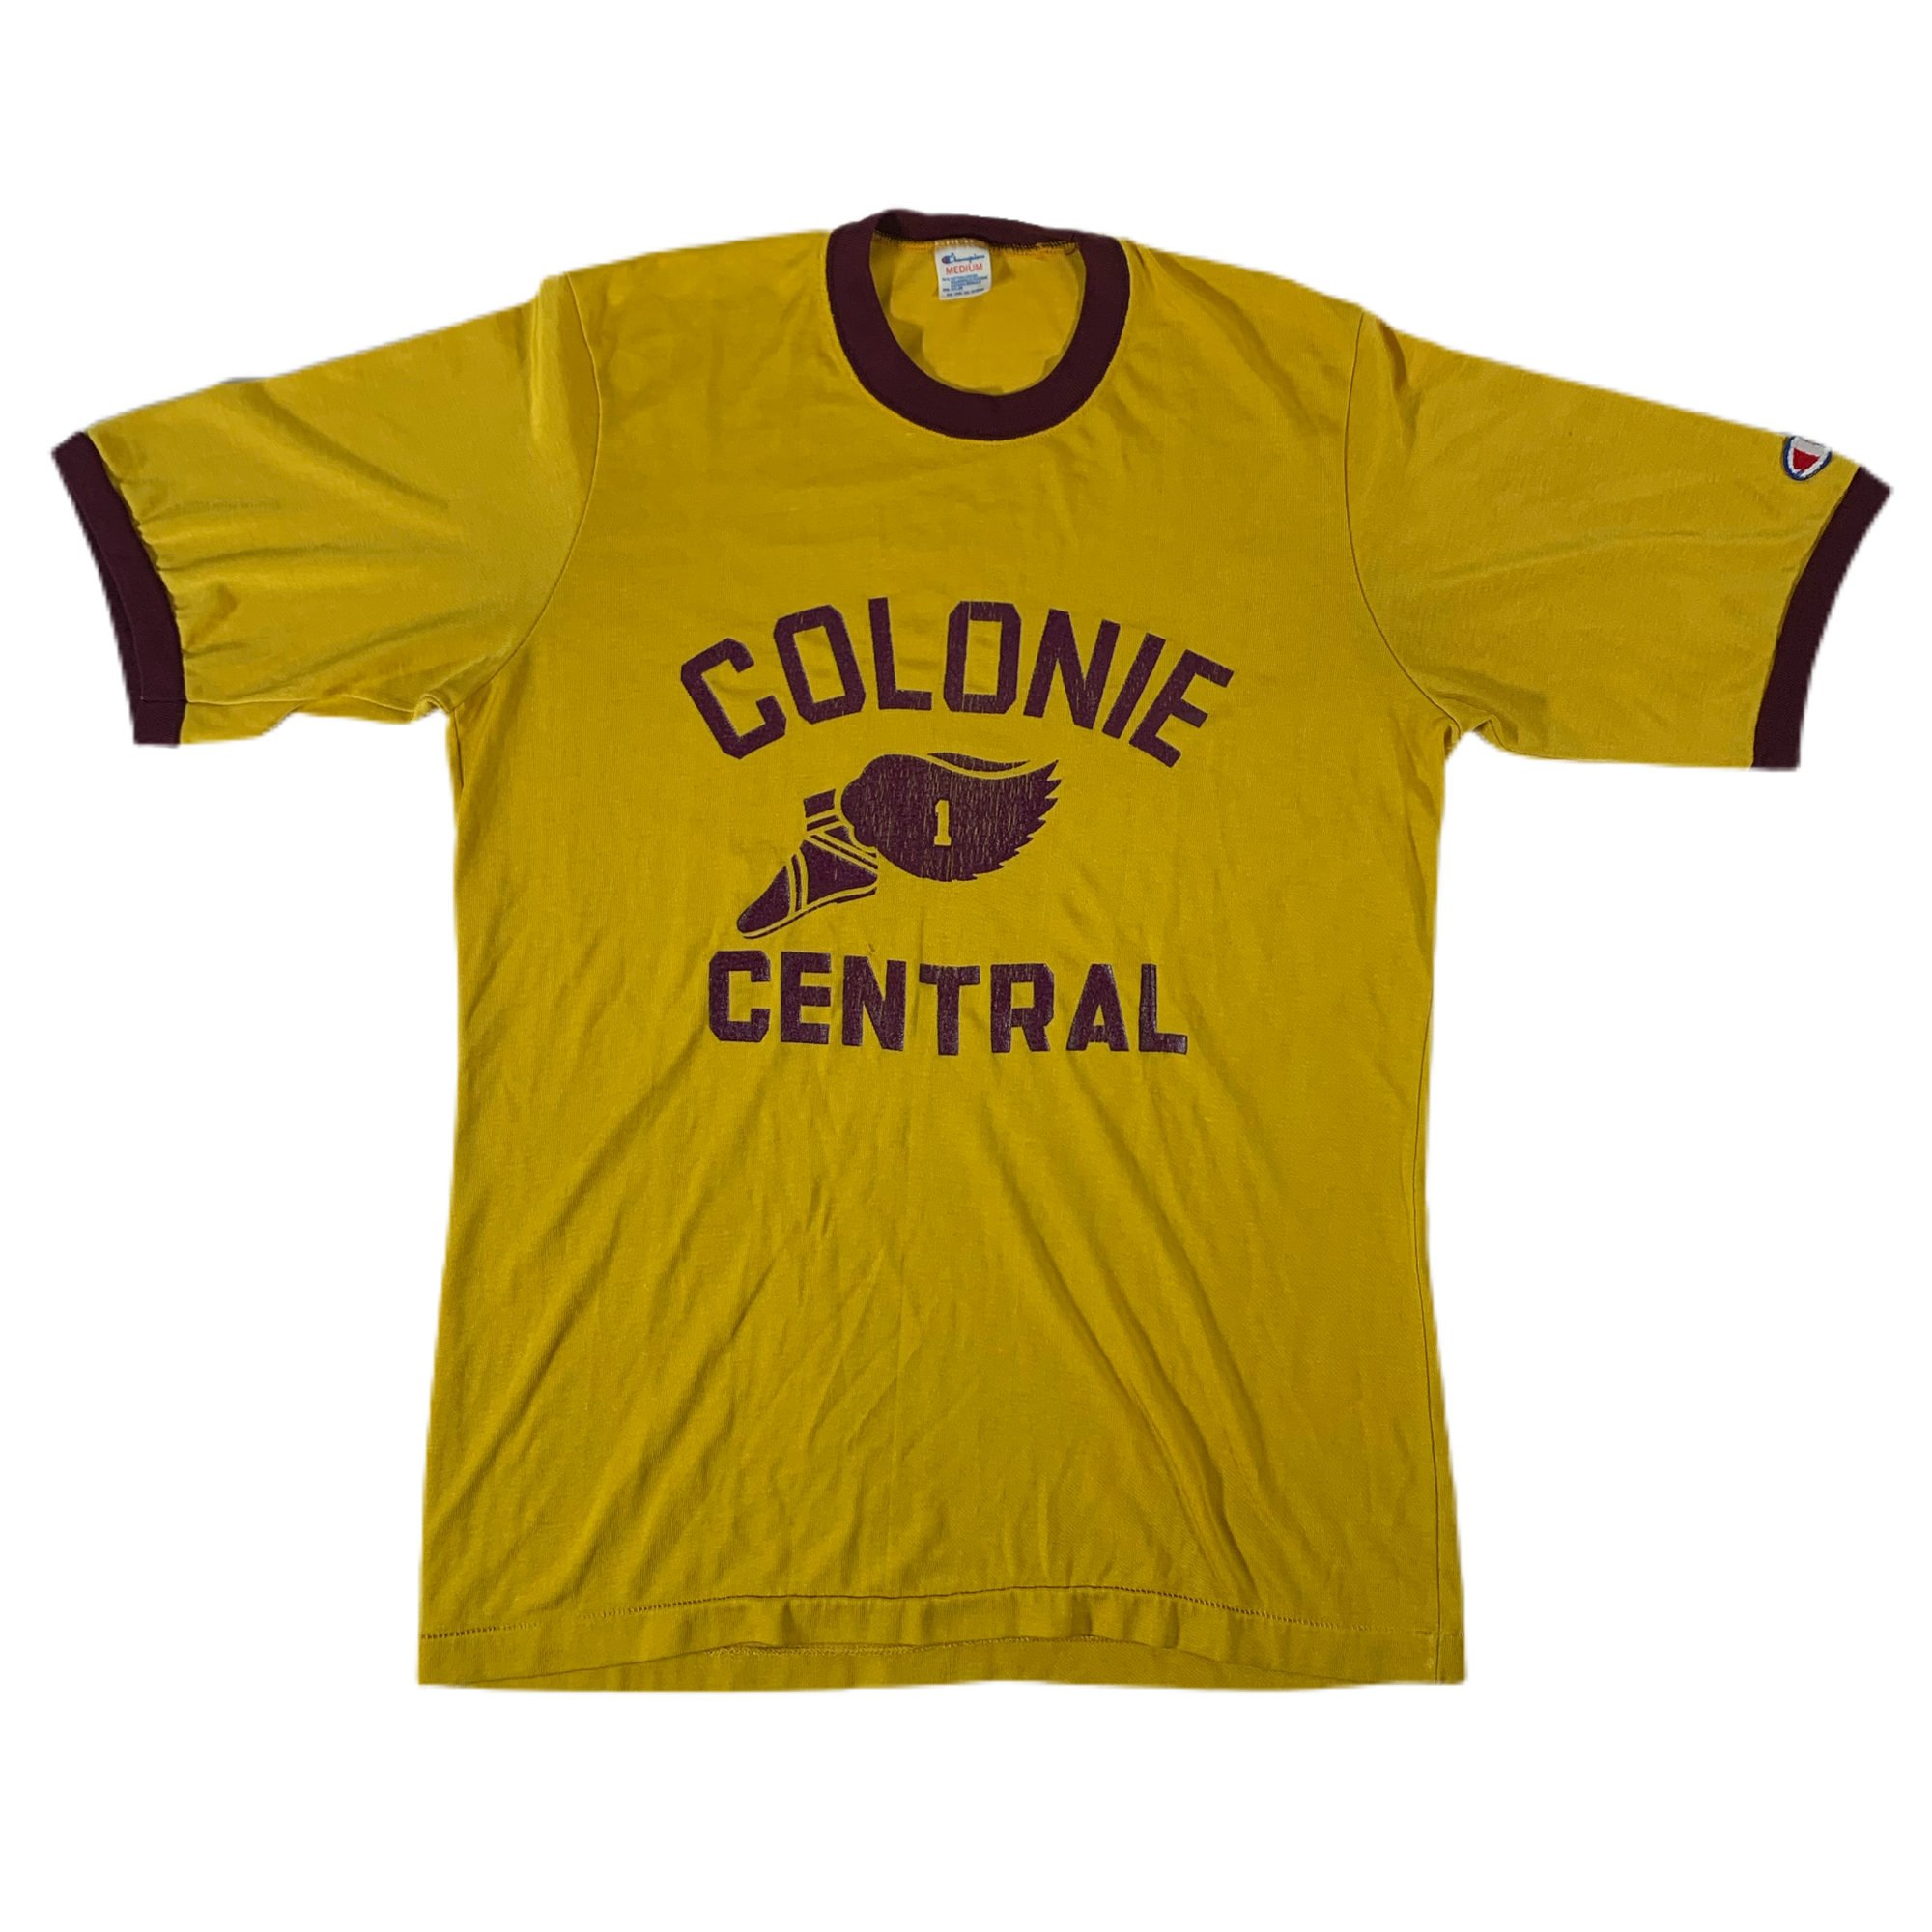 Vintage Champion “Colonie Central” Jersey - jointcustodydc